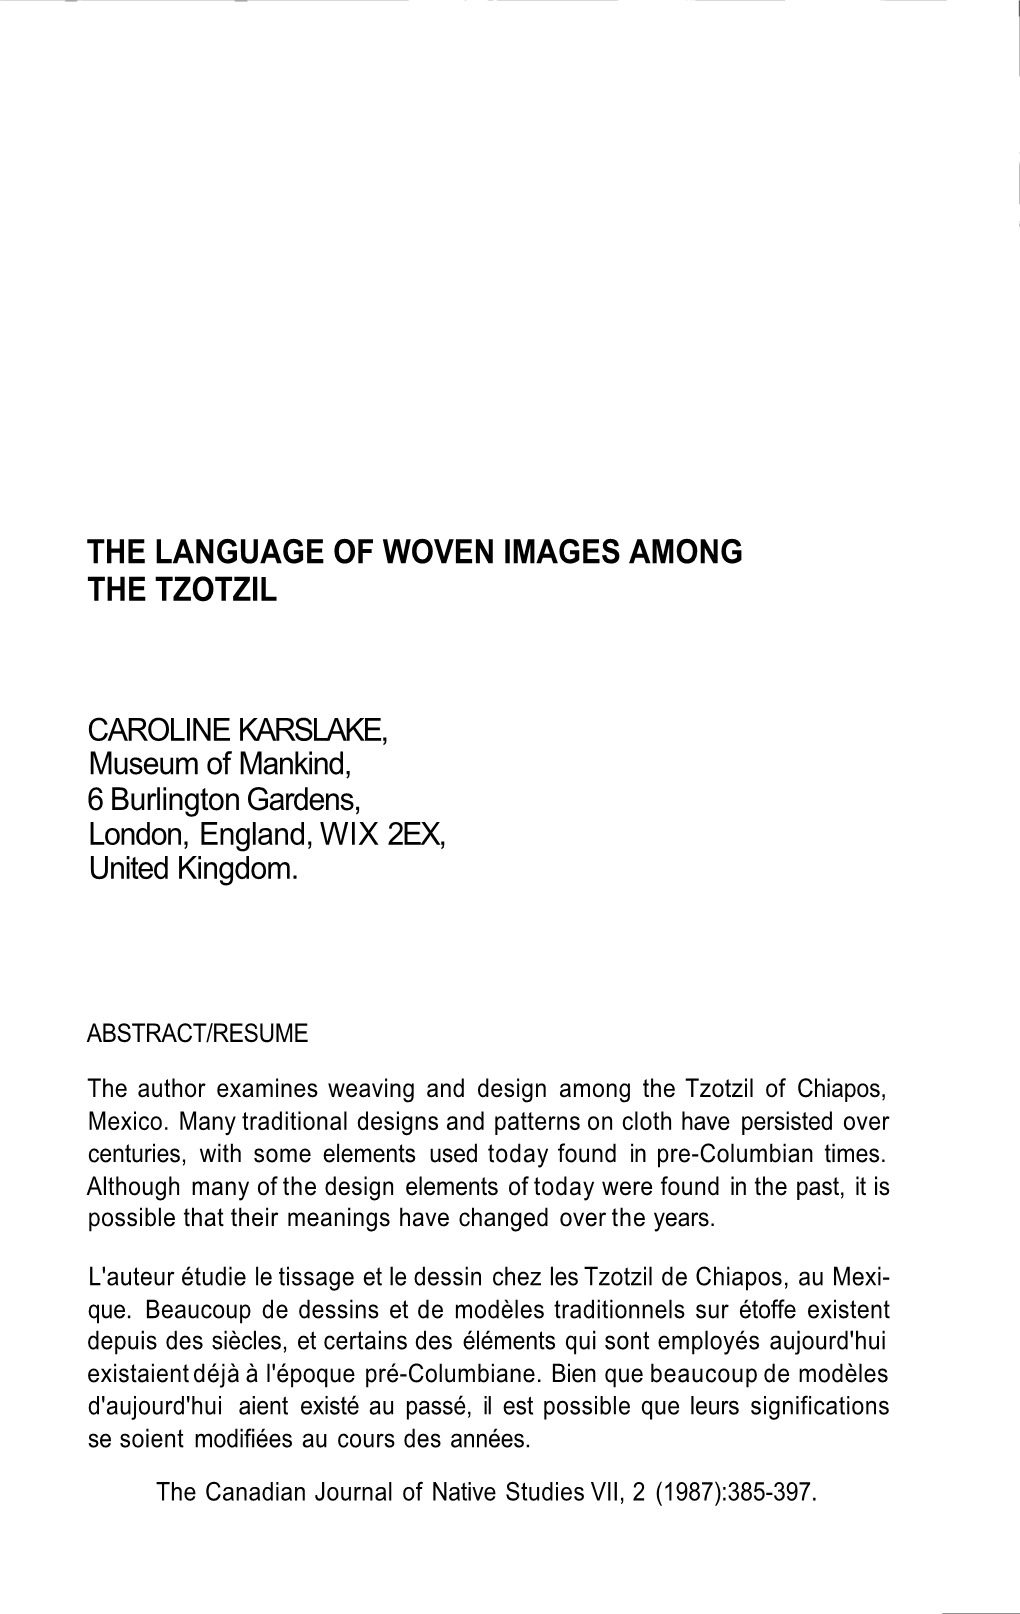 The Language of Woven Images Among the Tzotzil